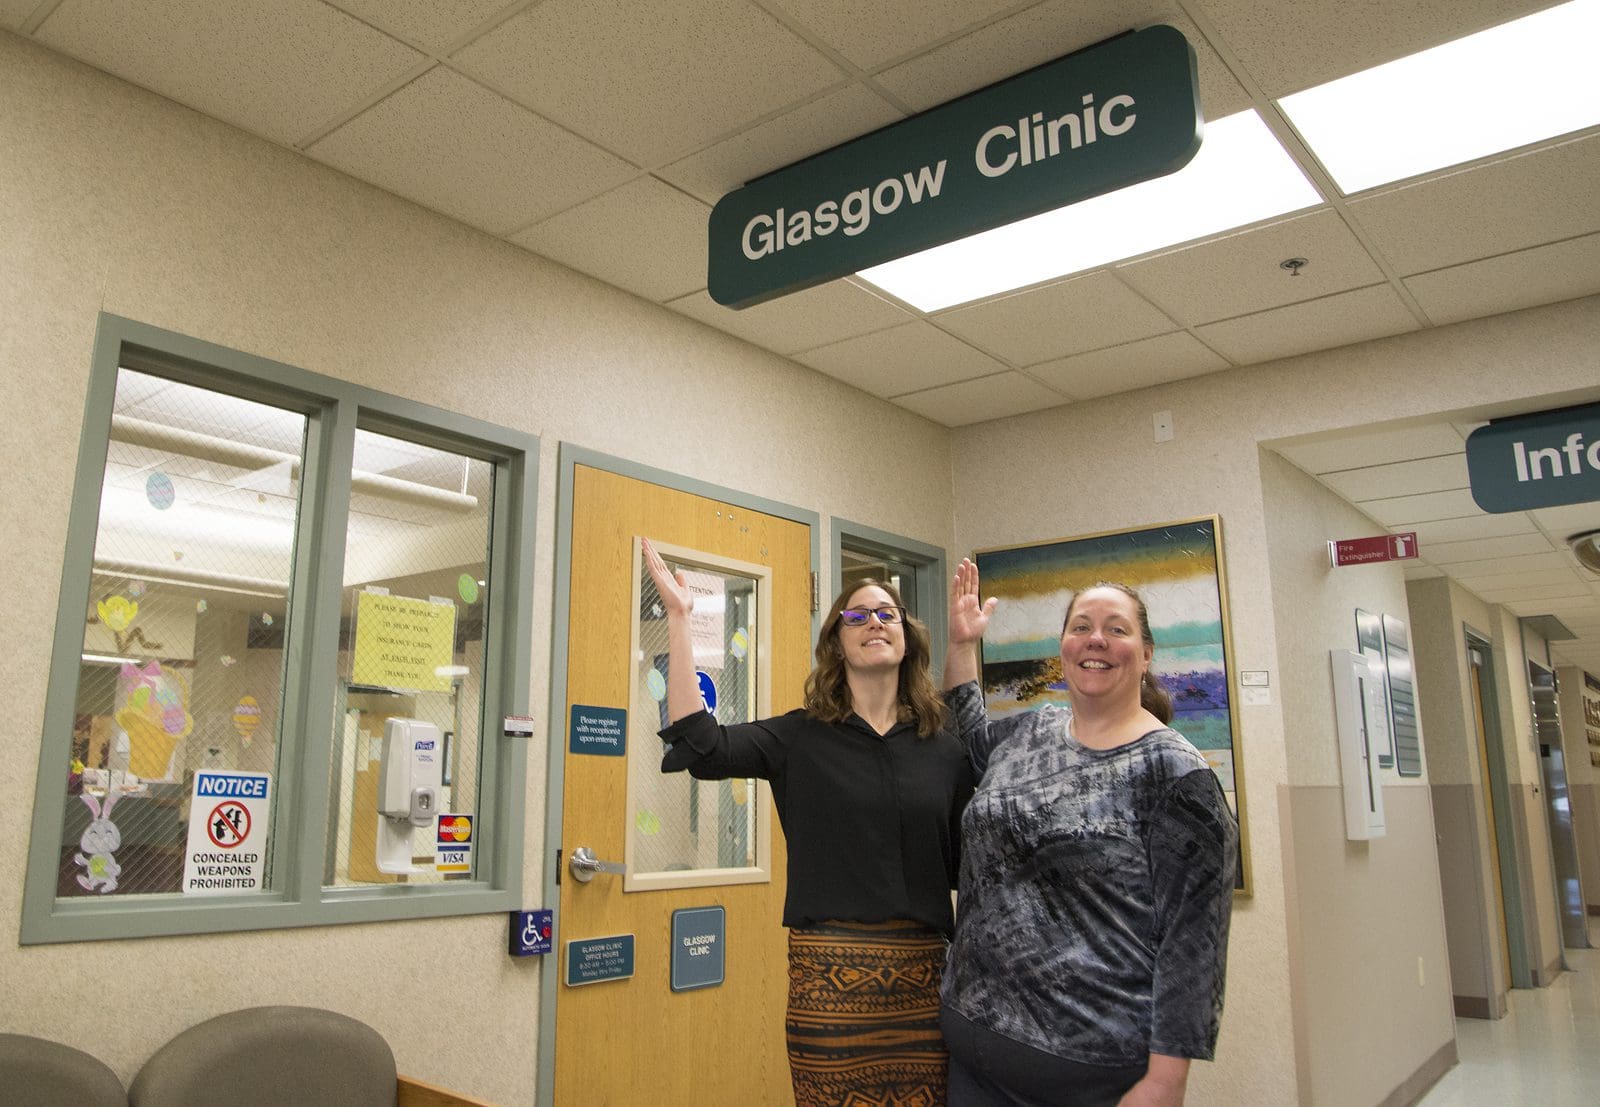 Anne Millard at the Glasgow clinic